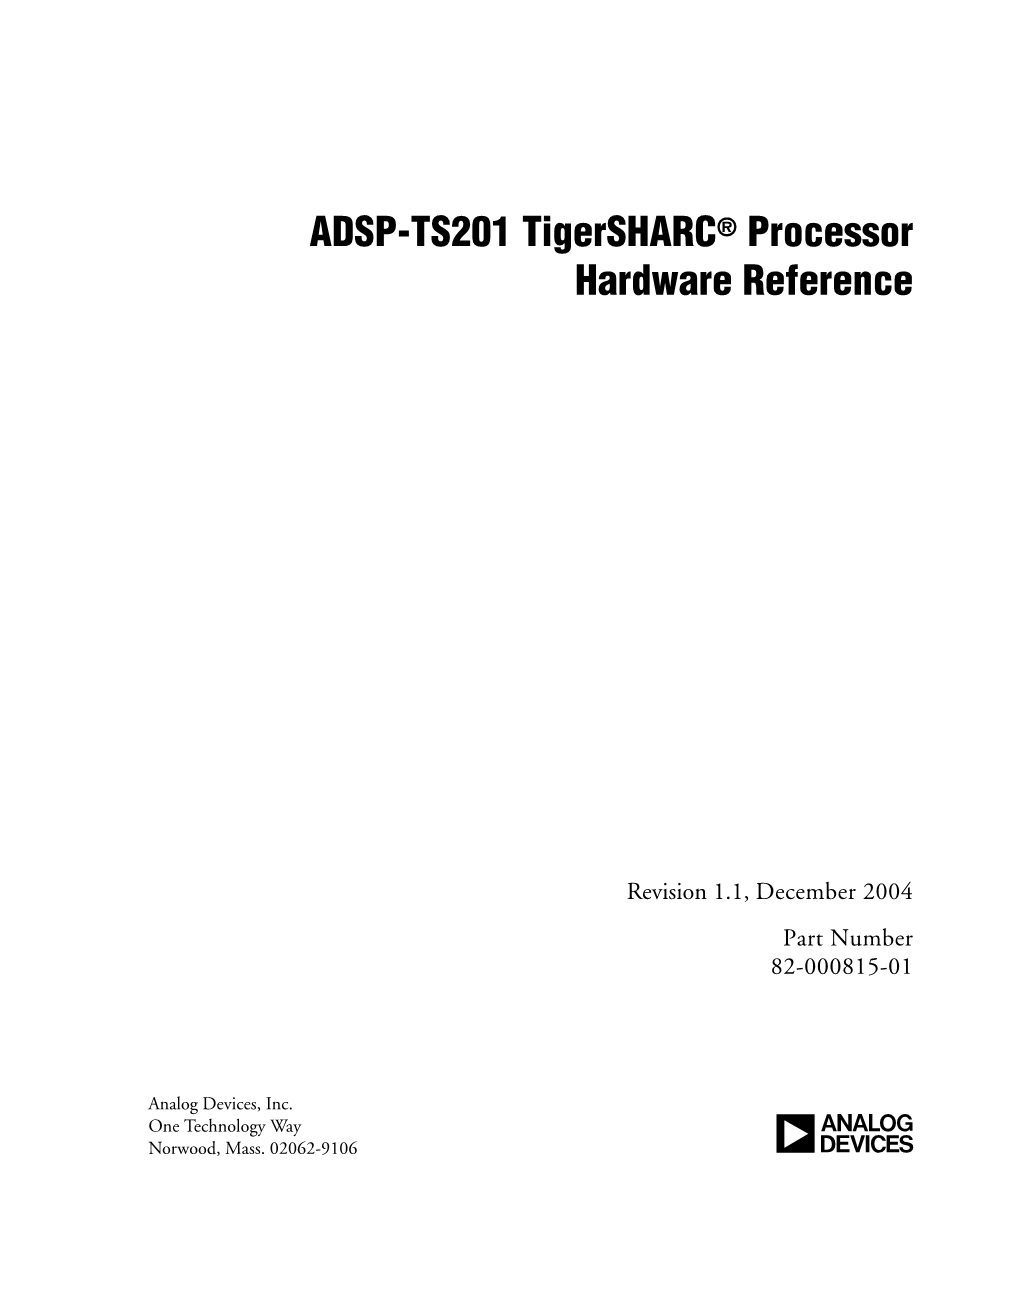 ADSP-TS201 Tigersharc Processor Hardware Reference, Revision 1.0, November 2004